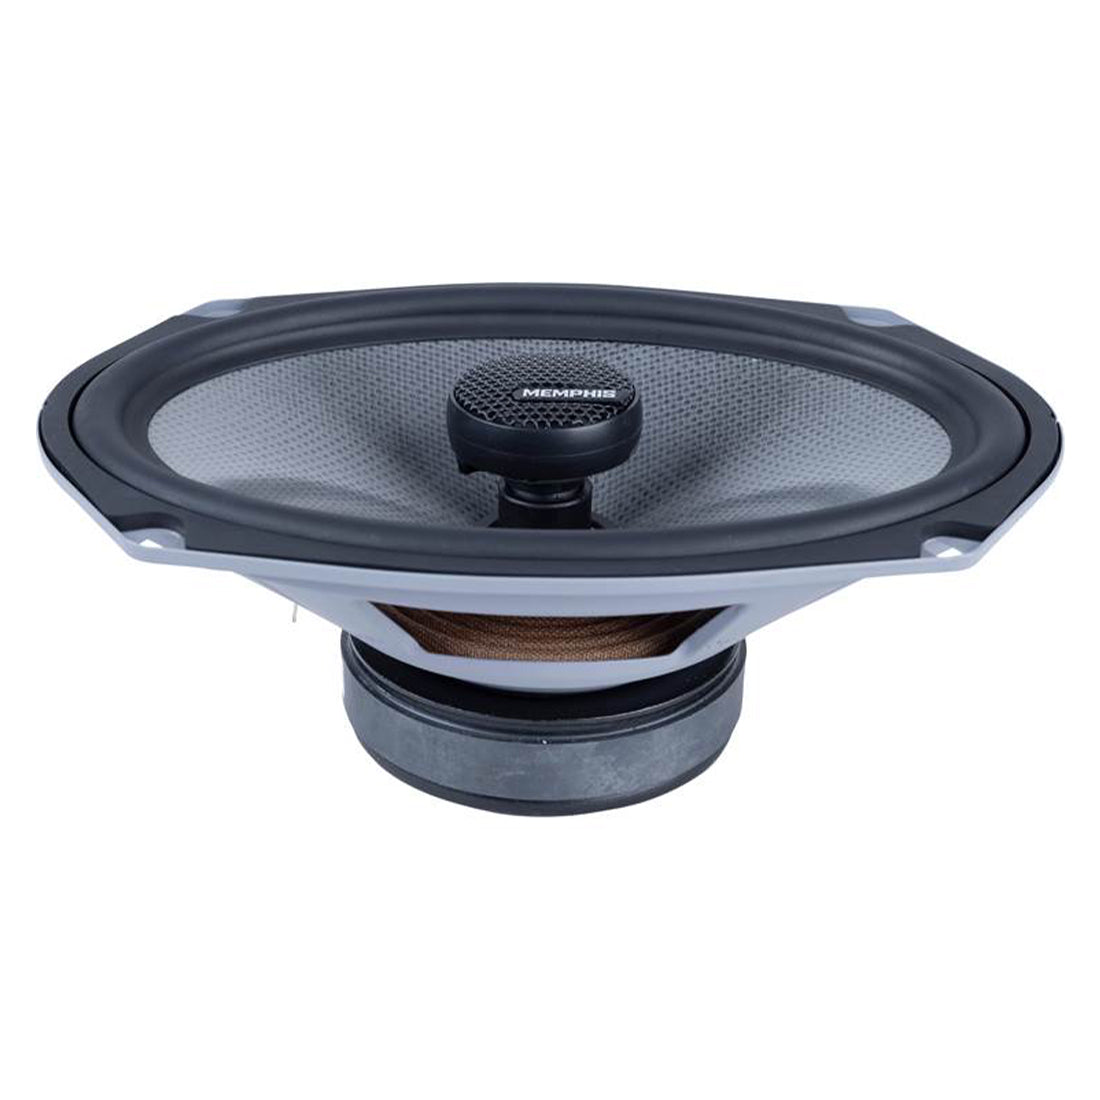 Memphis Audio MS69 M Series 6"x9" 2-Way Car Speakers / Component System